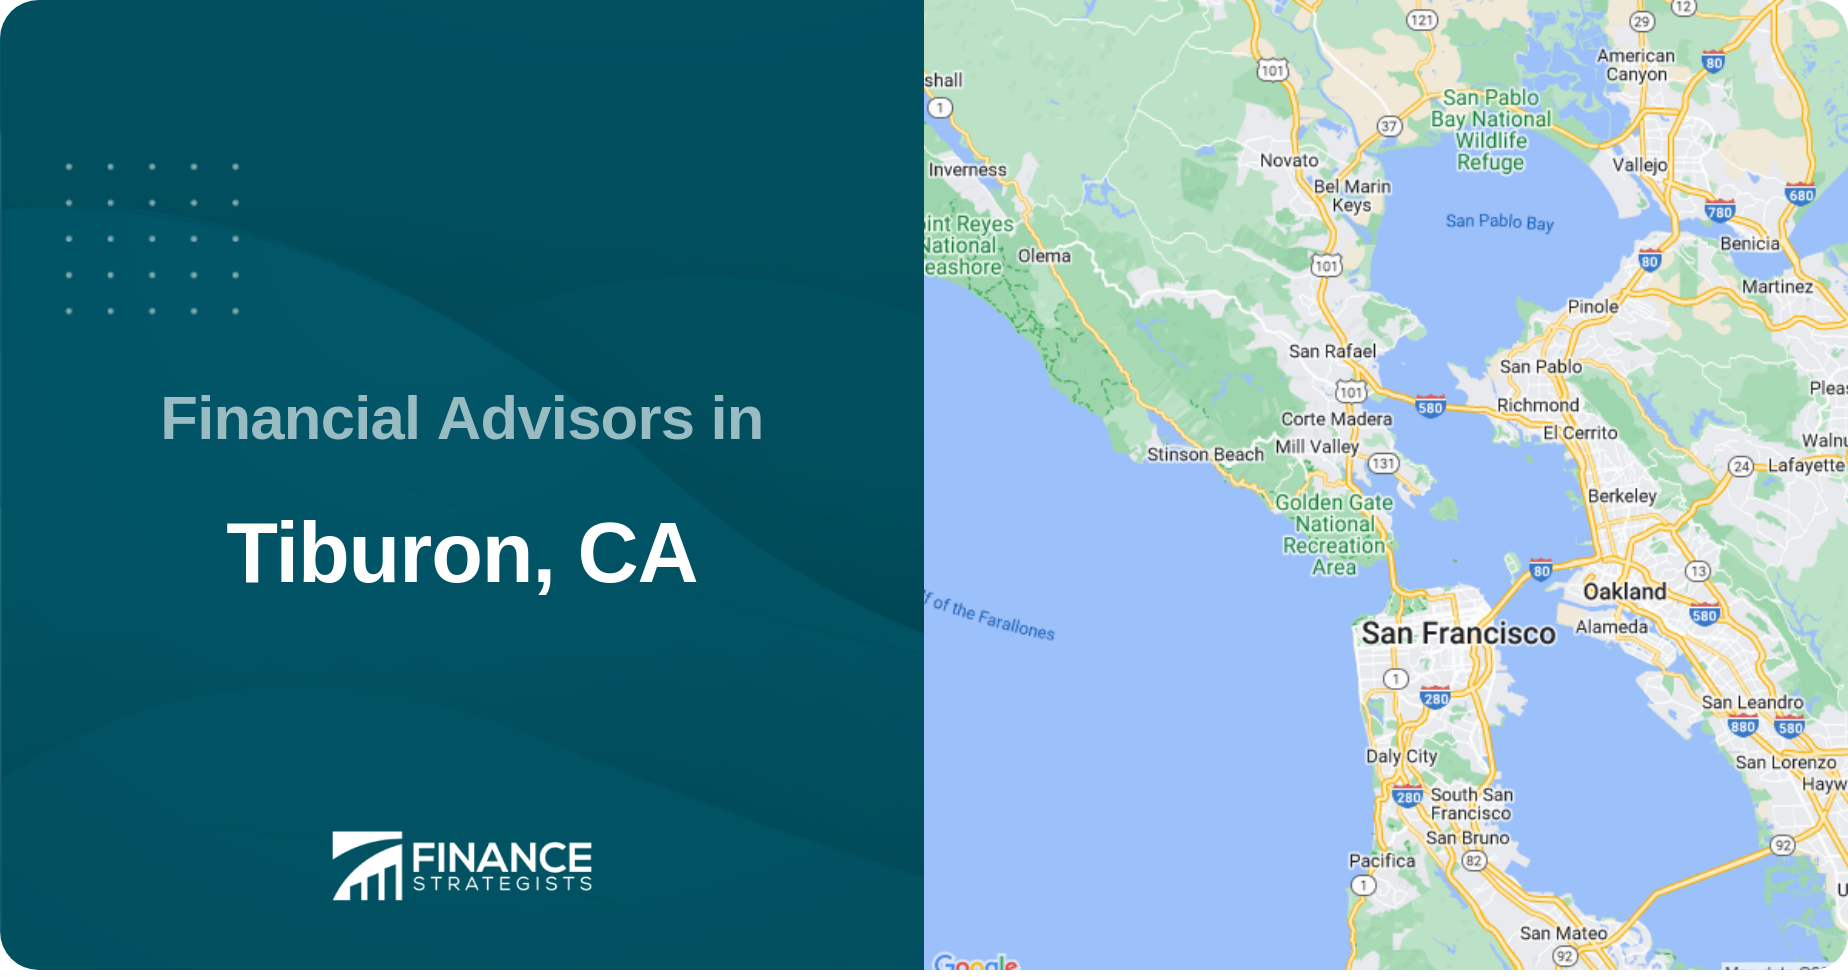 Financial Advisors in Tiburon, CA